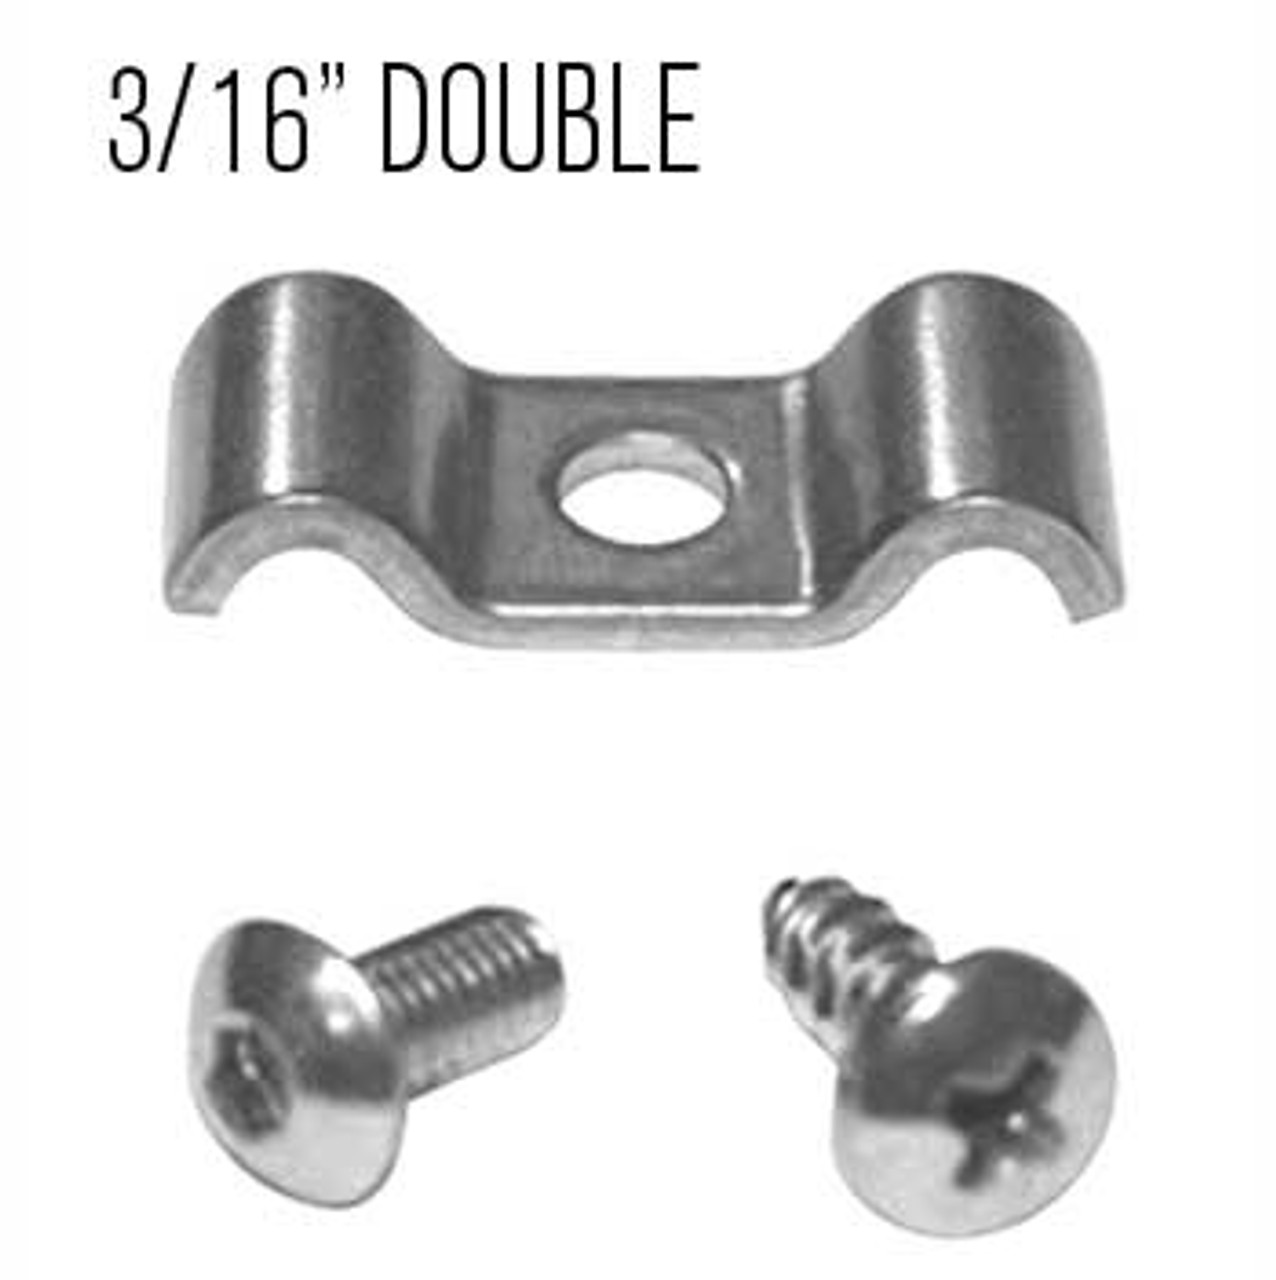 Kugel Komponents 3/16" X 3/16" Double Line Clamps, 6 Pack